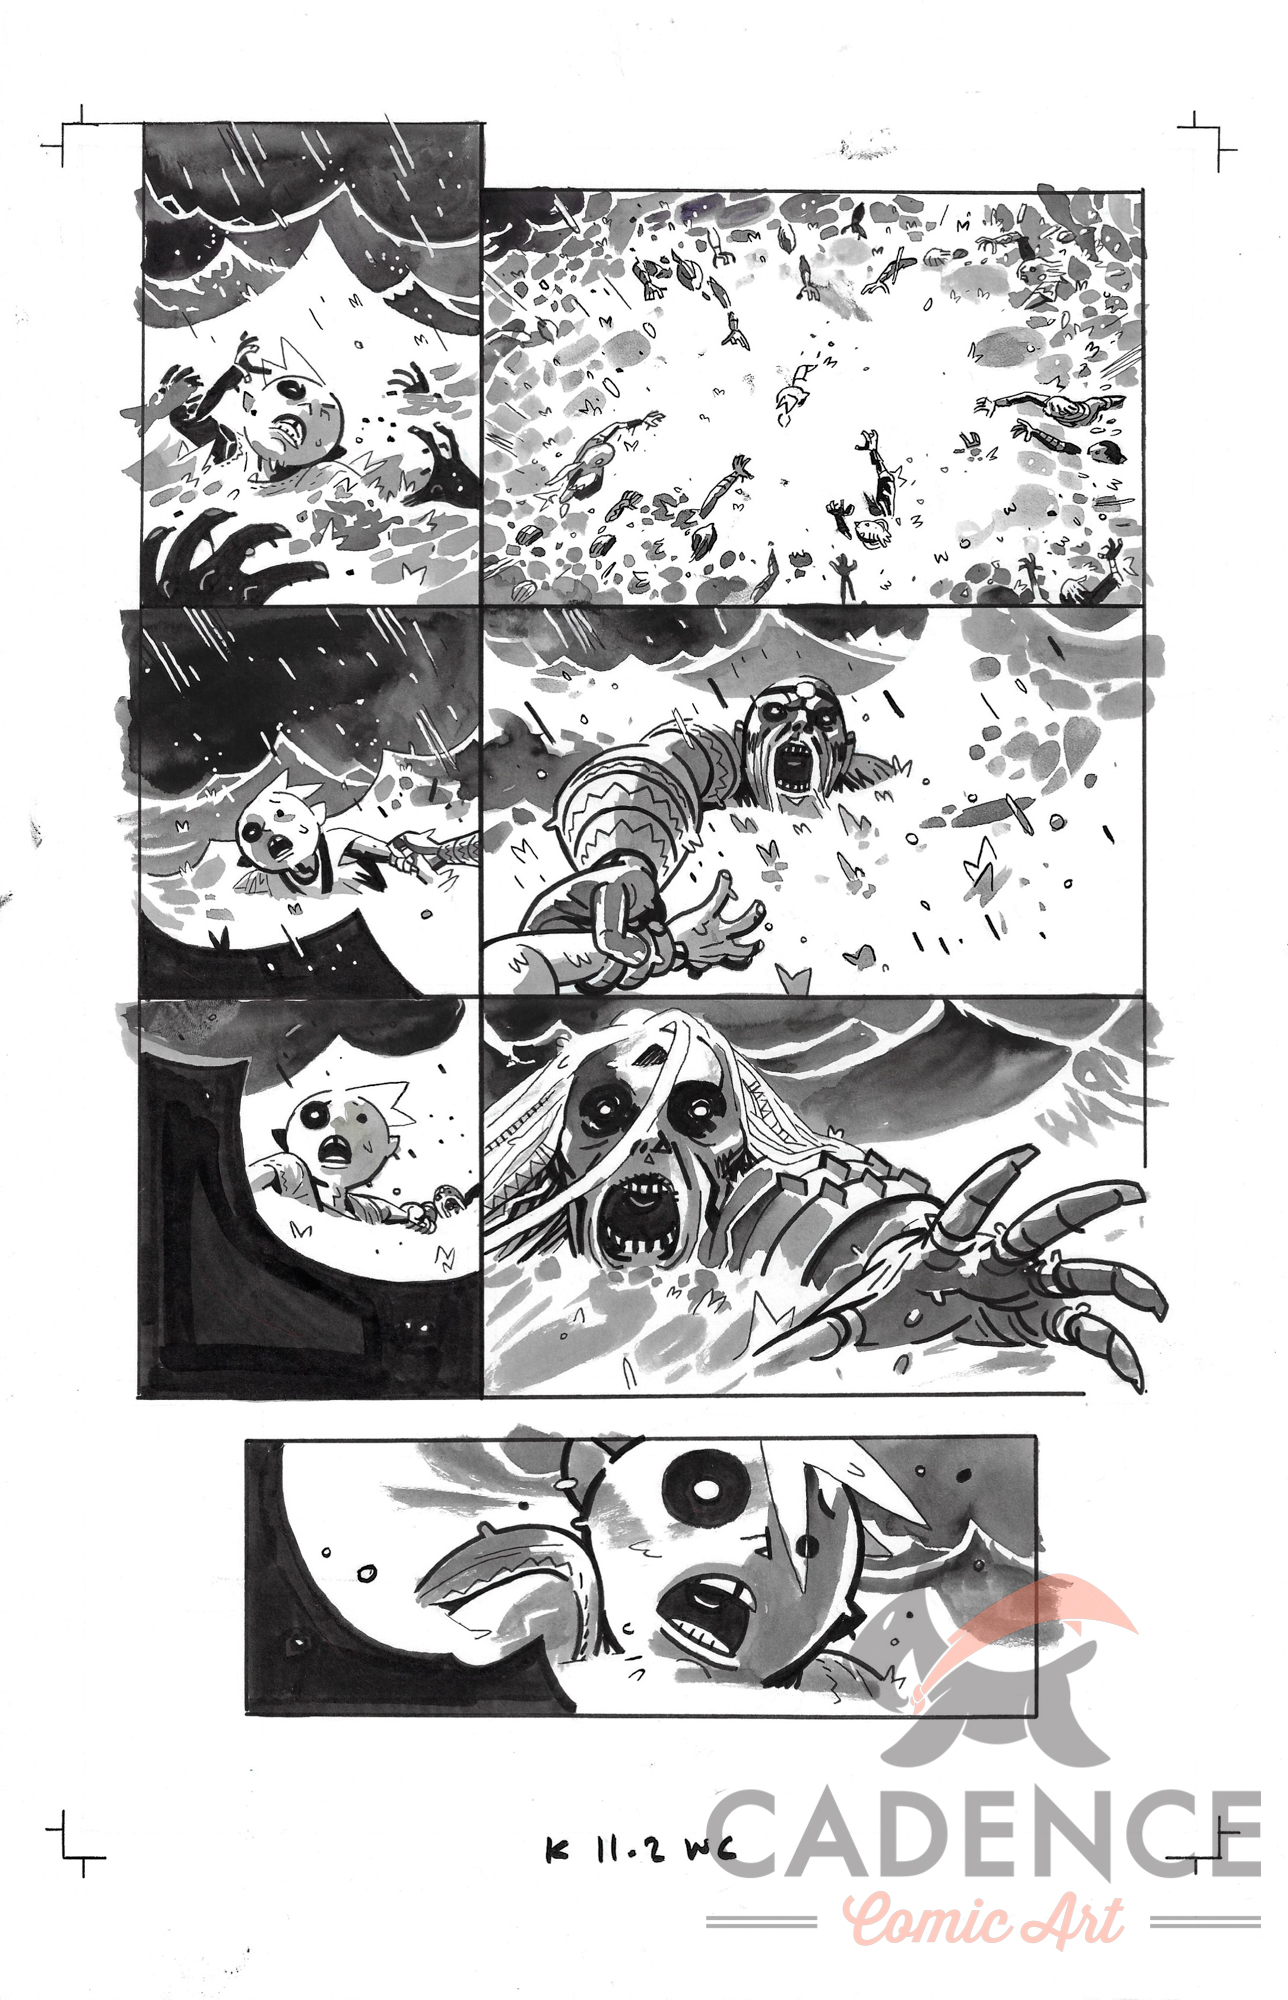 Image of Kaya (Image Comics), Issue 11, Page 02